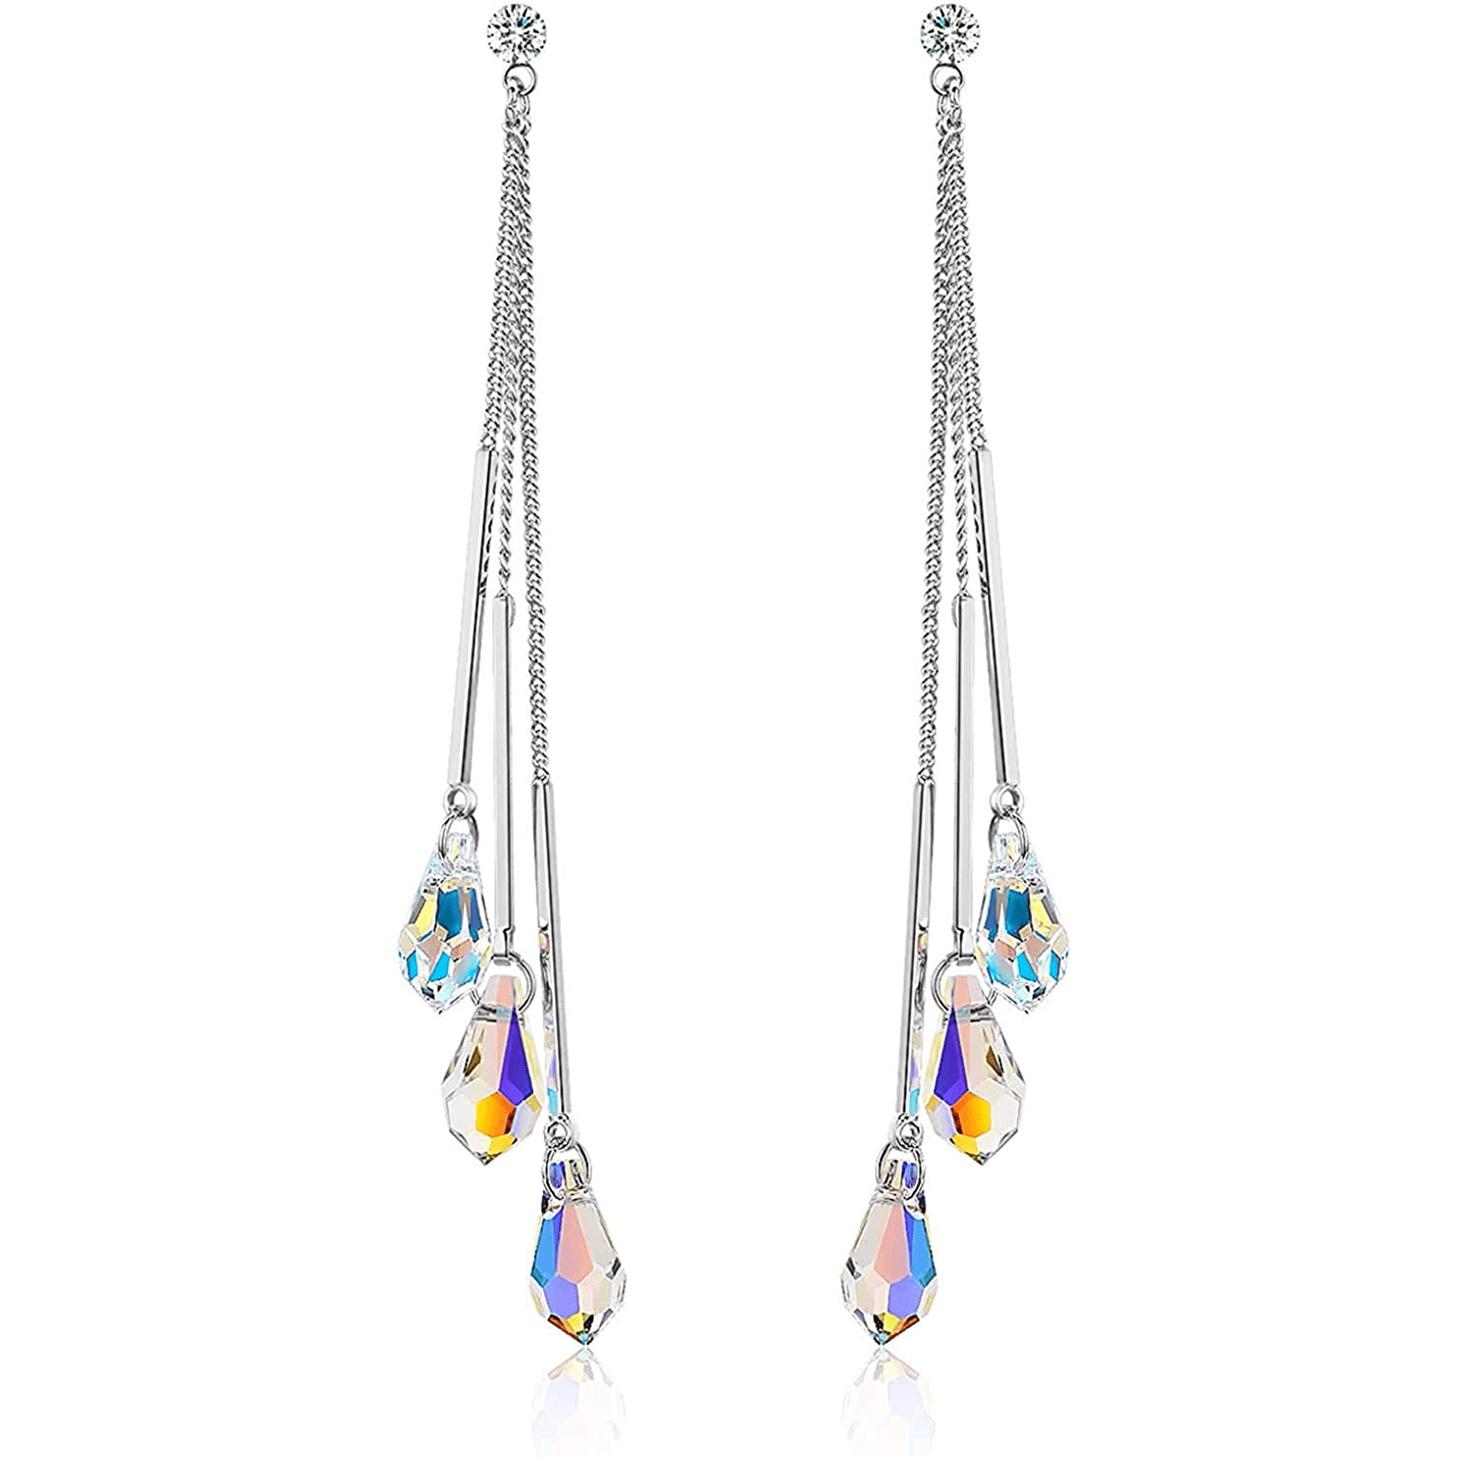 Savlano 14K White Gold Plated Aurora Borealis Drop Cut 18 Inches Pendant Chain Necklace For Women & Girls 